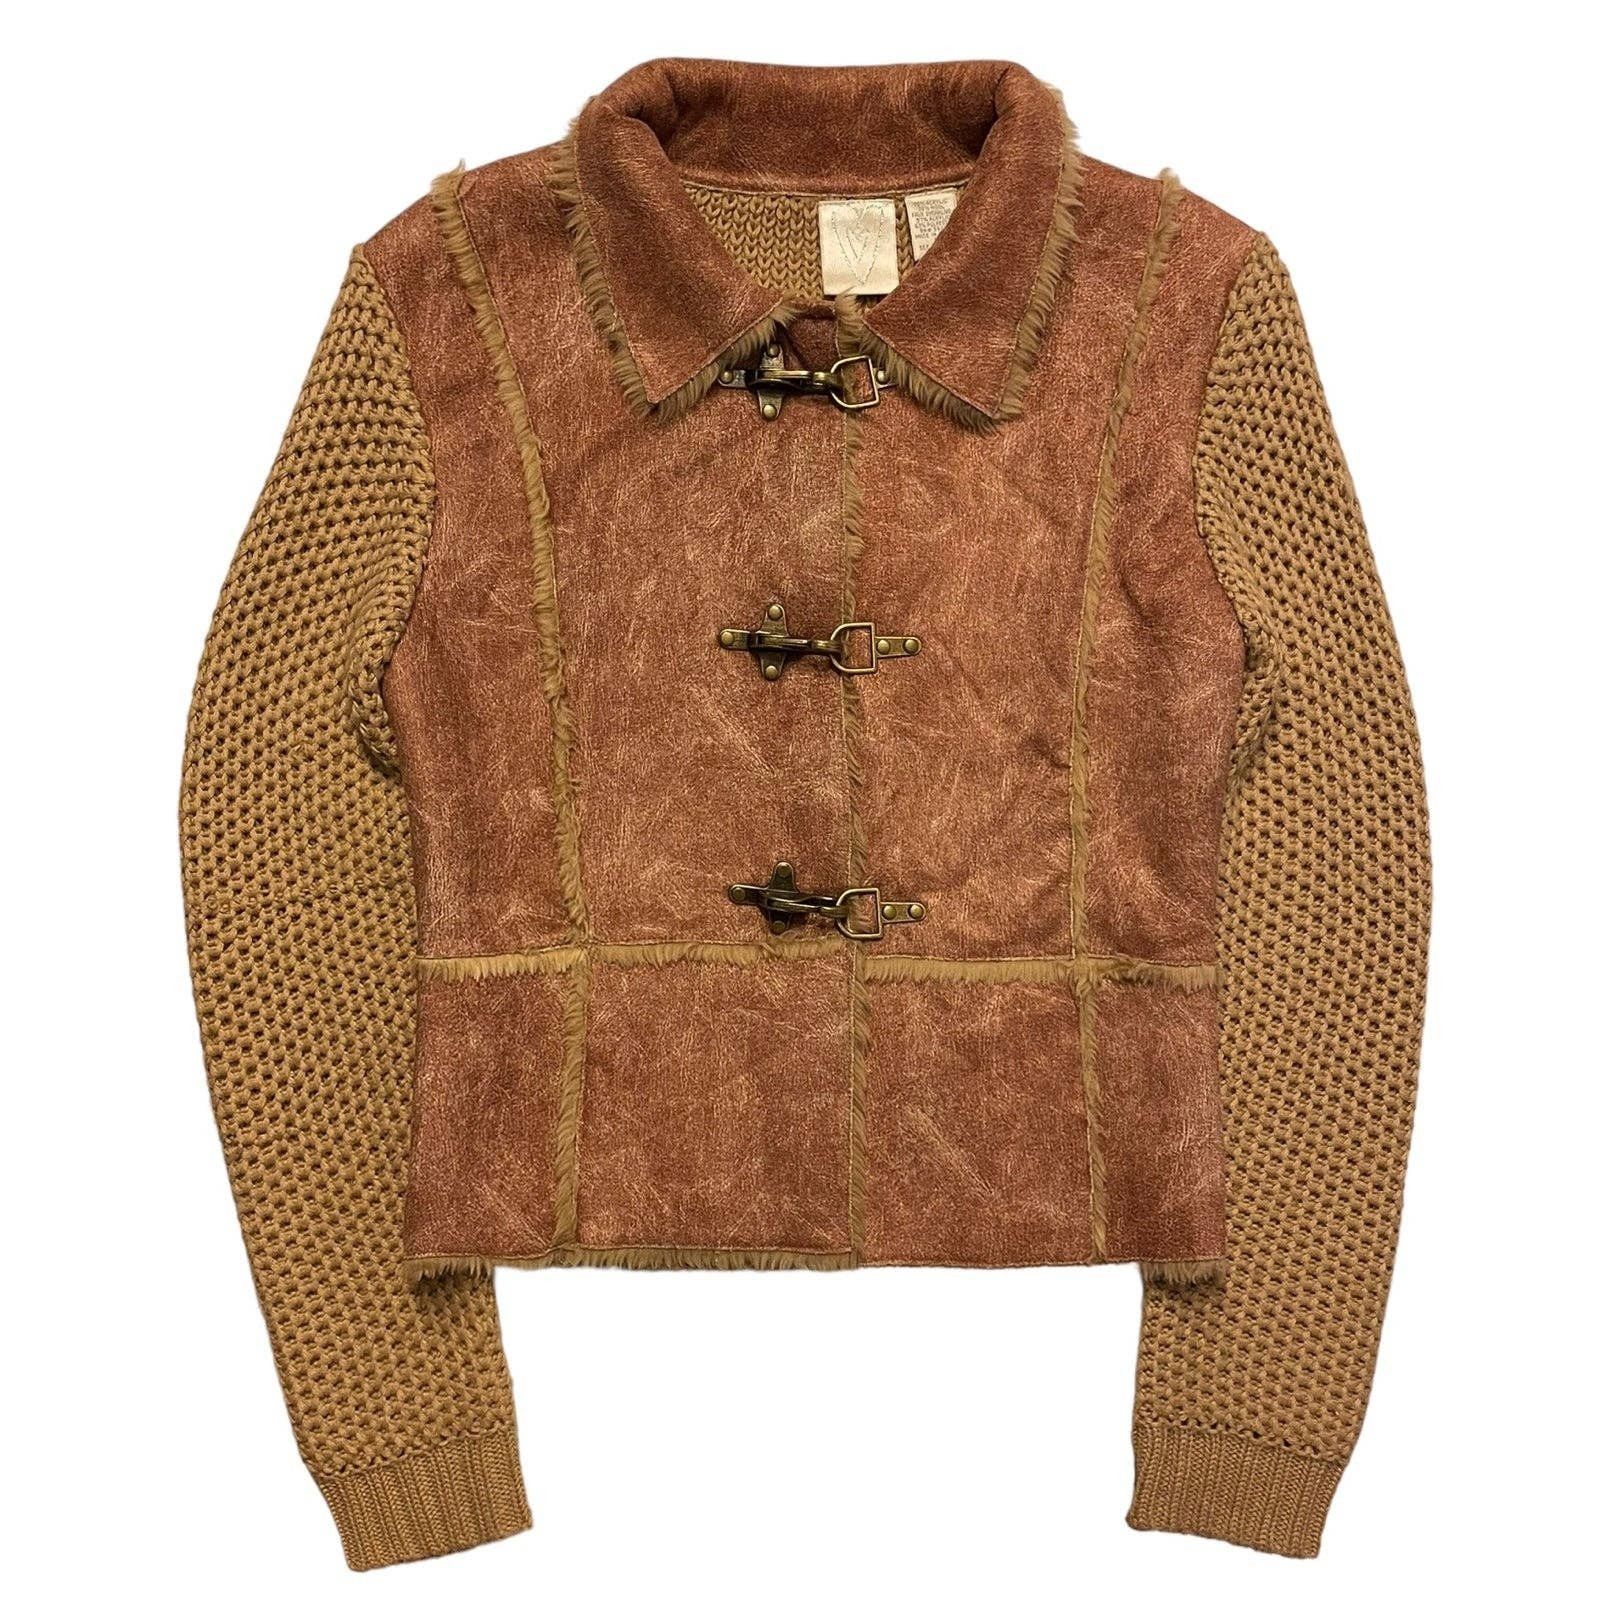 Vintage Vintage Y2K grunge faux shearling knit sweater jacket Size L Size L / US 10 / IT 46 - 1 Preview